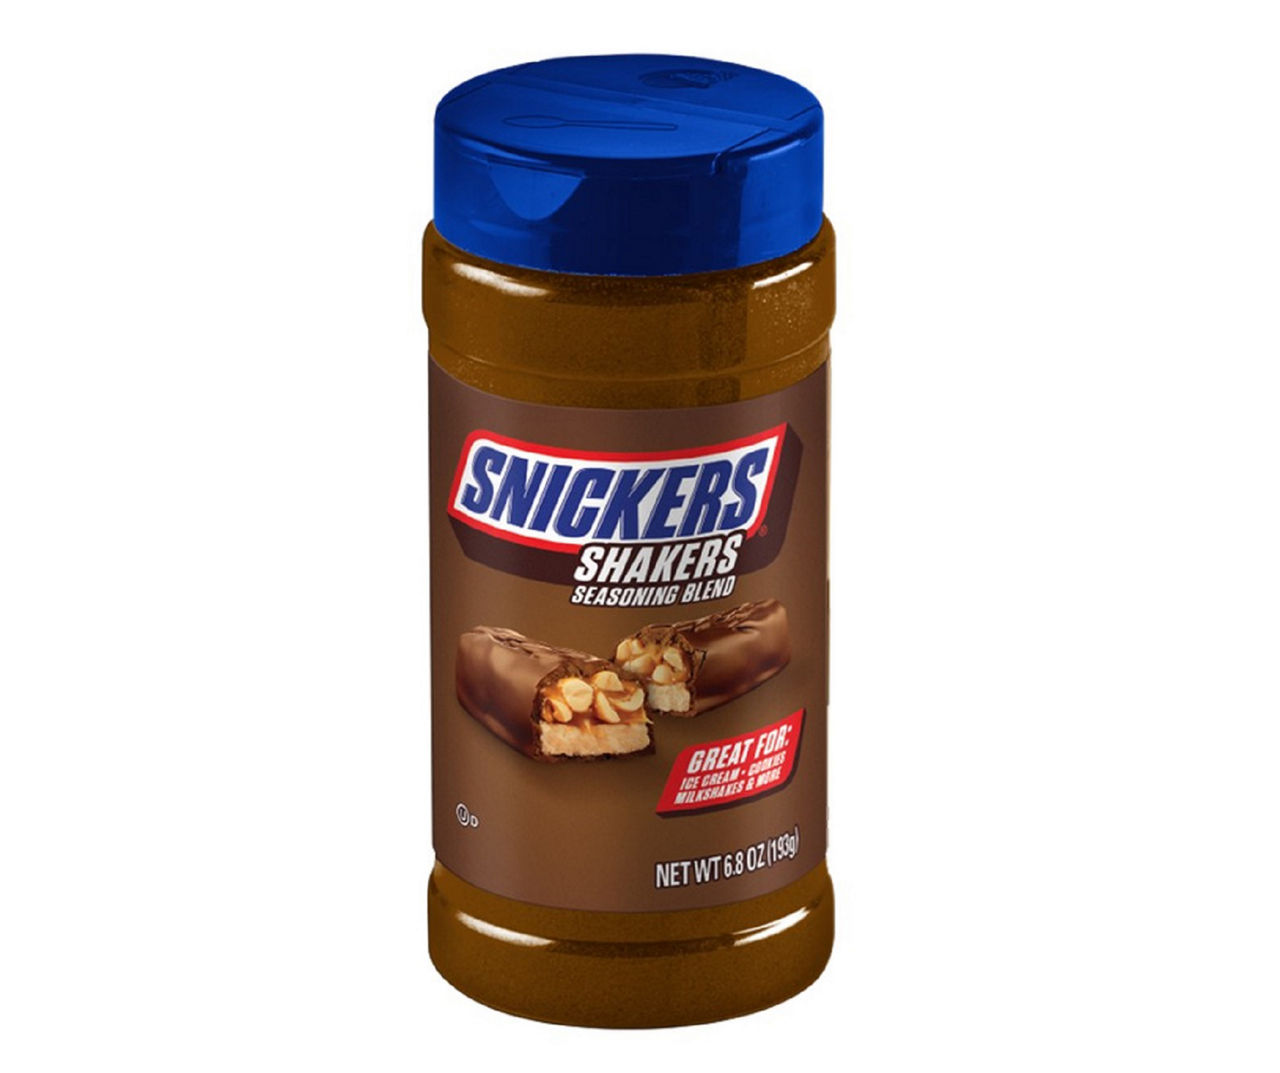 SNICKERS Shakers Seasoning Blend (9.5 oz.)